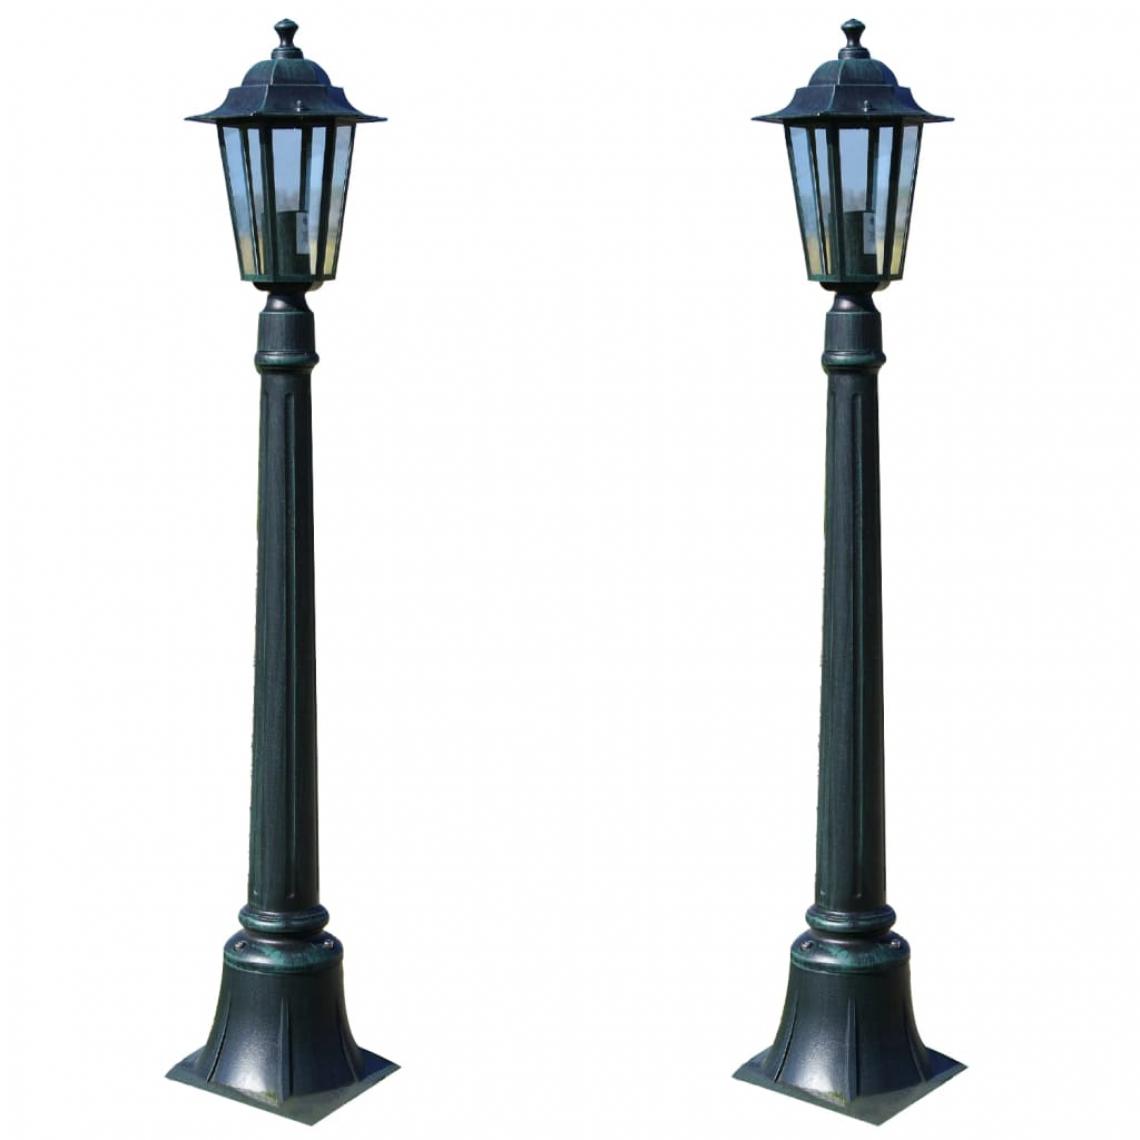 Icaverne - Splendide Luminaires Banjul Lampes de jardin 2 pcs 105 cm - Lampadaire